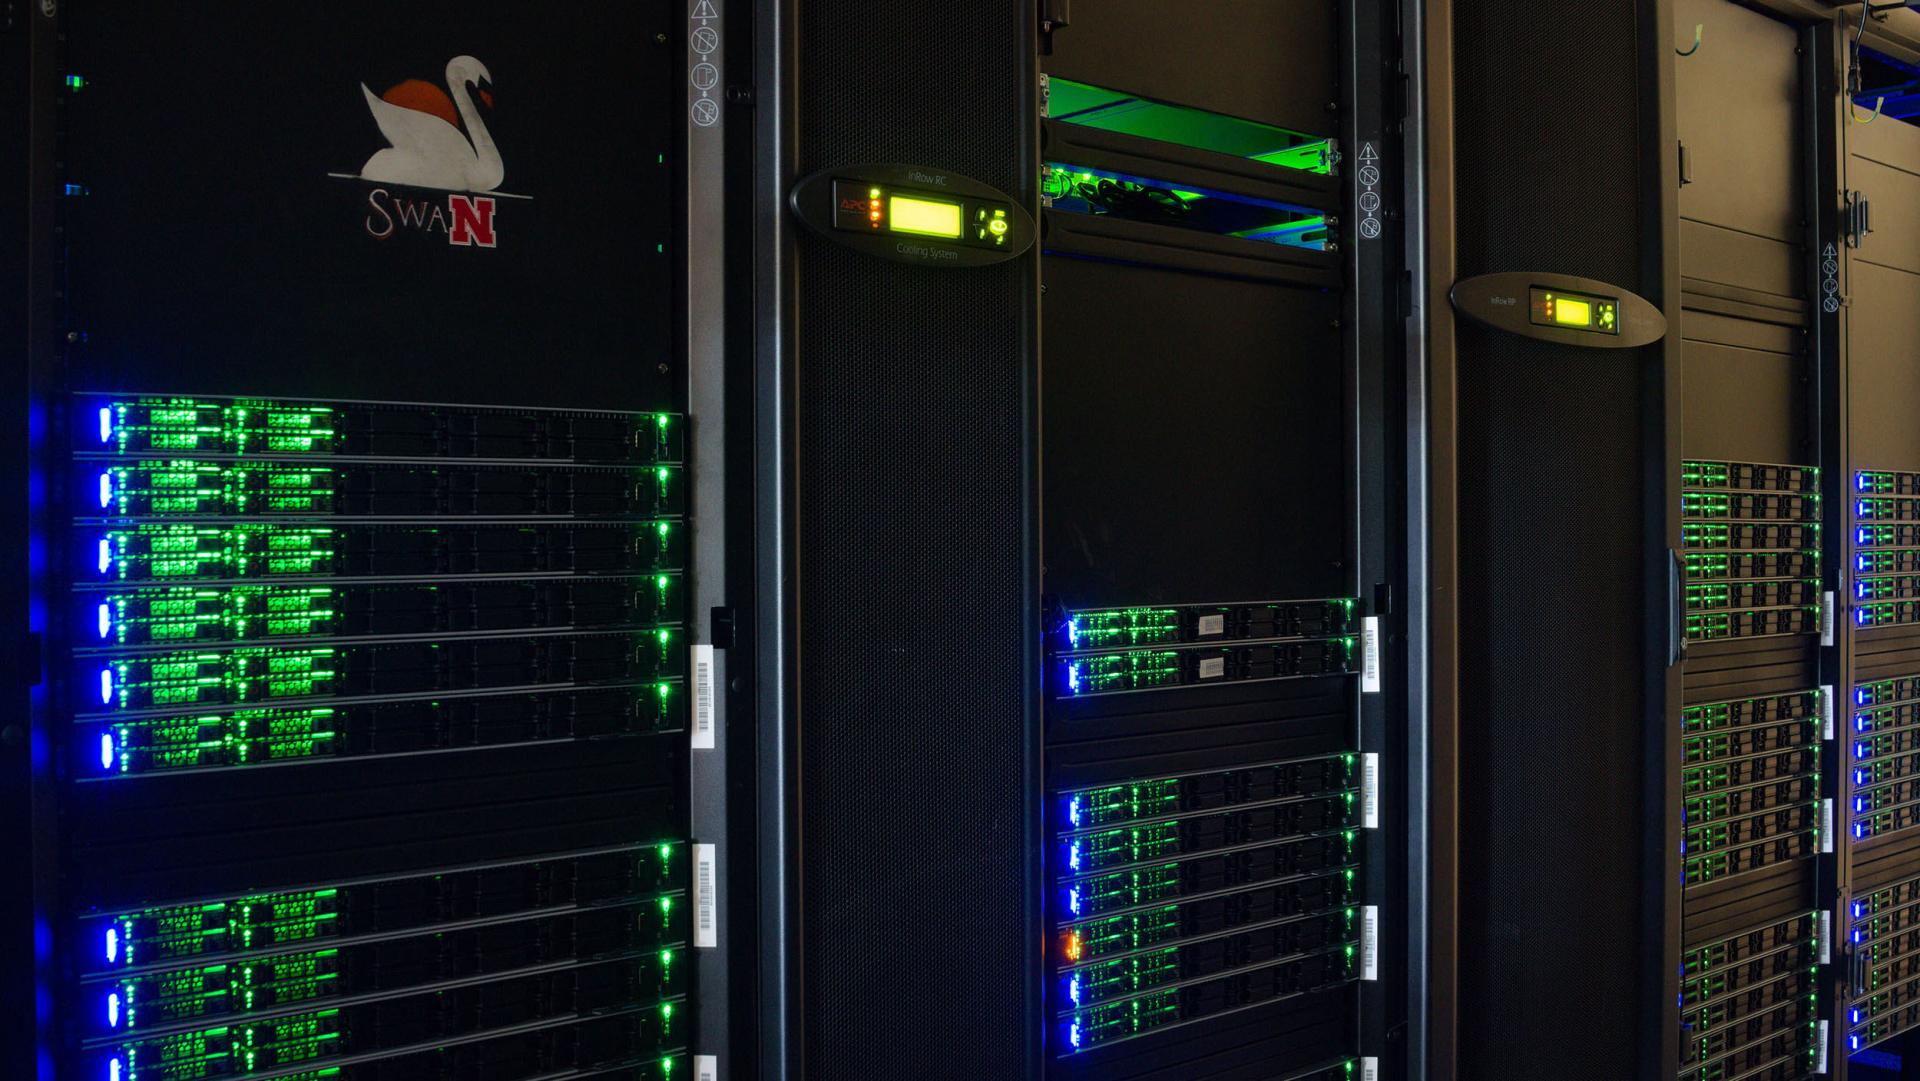 Swan supercomputer